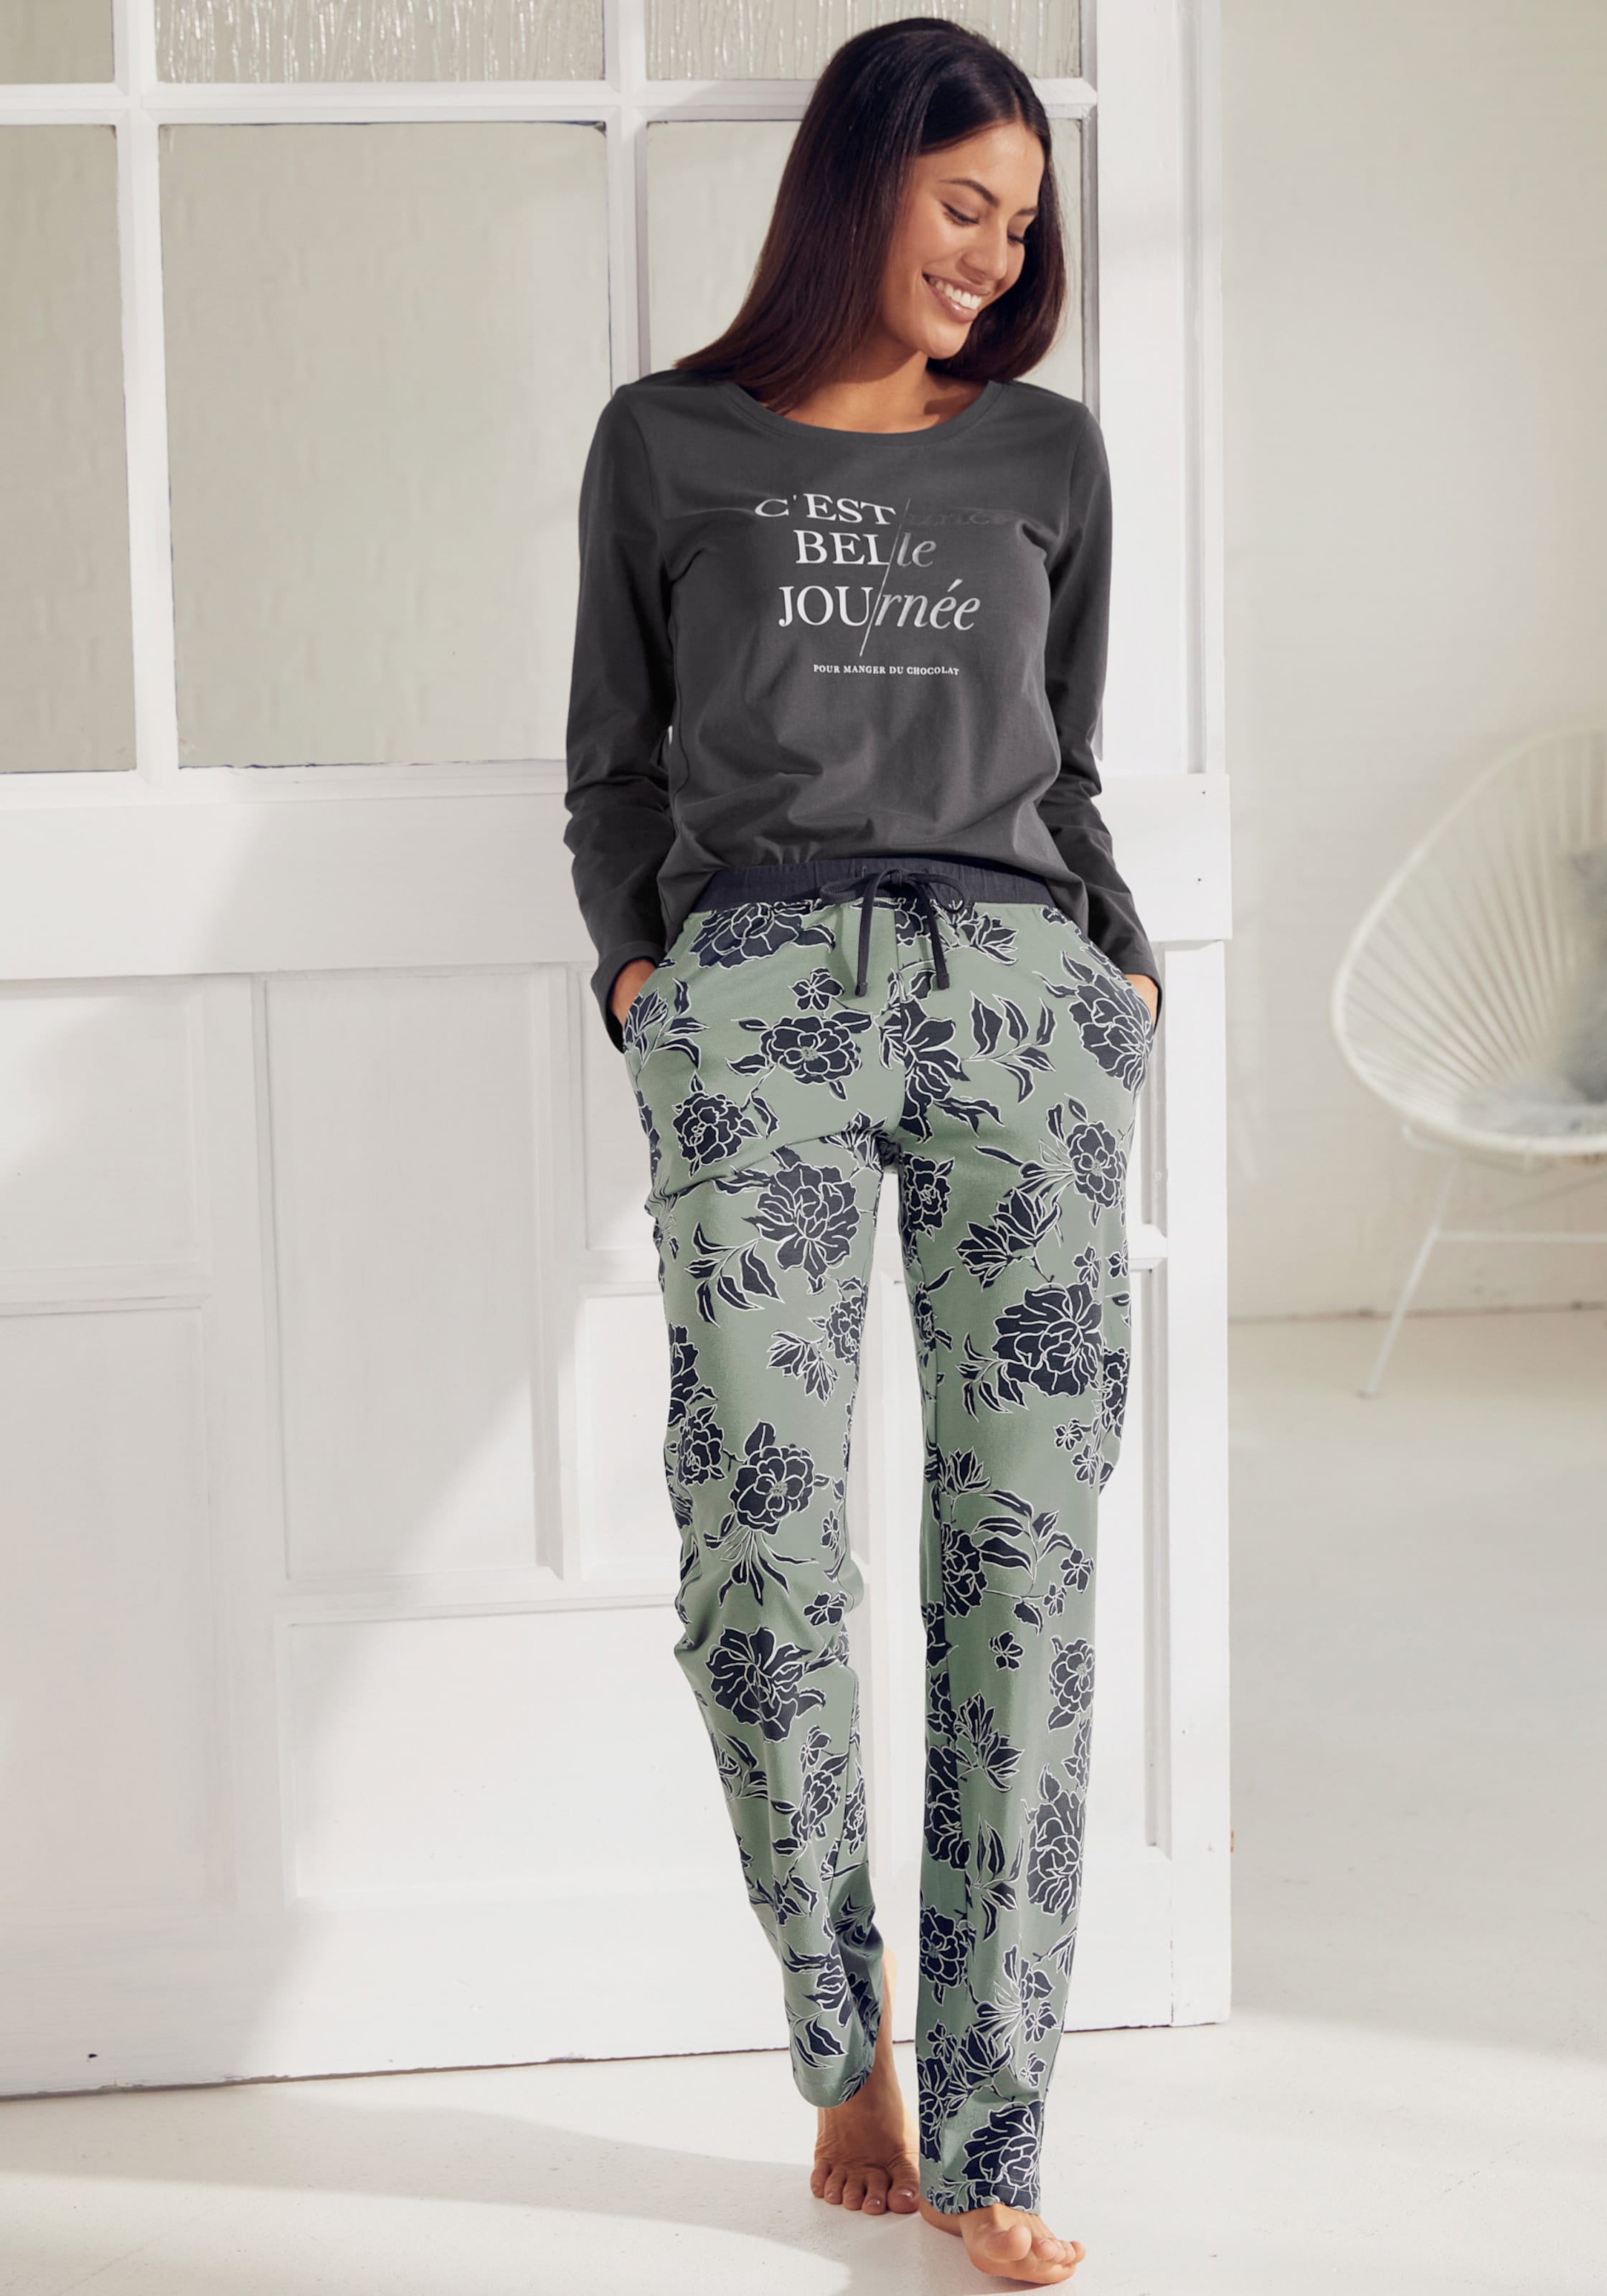 Vivance Dreams Pyjama in graphit-graugrün | heine